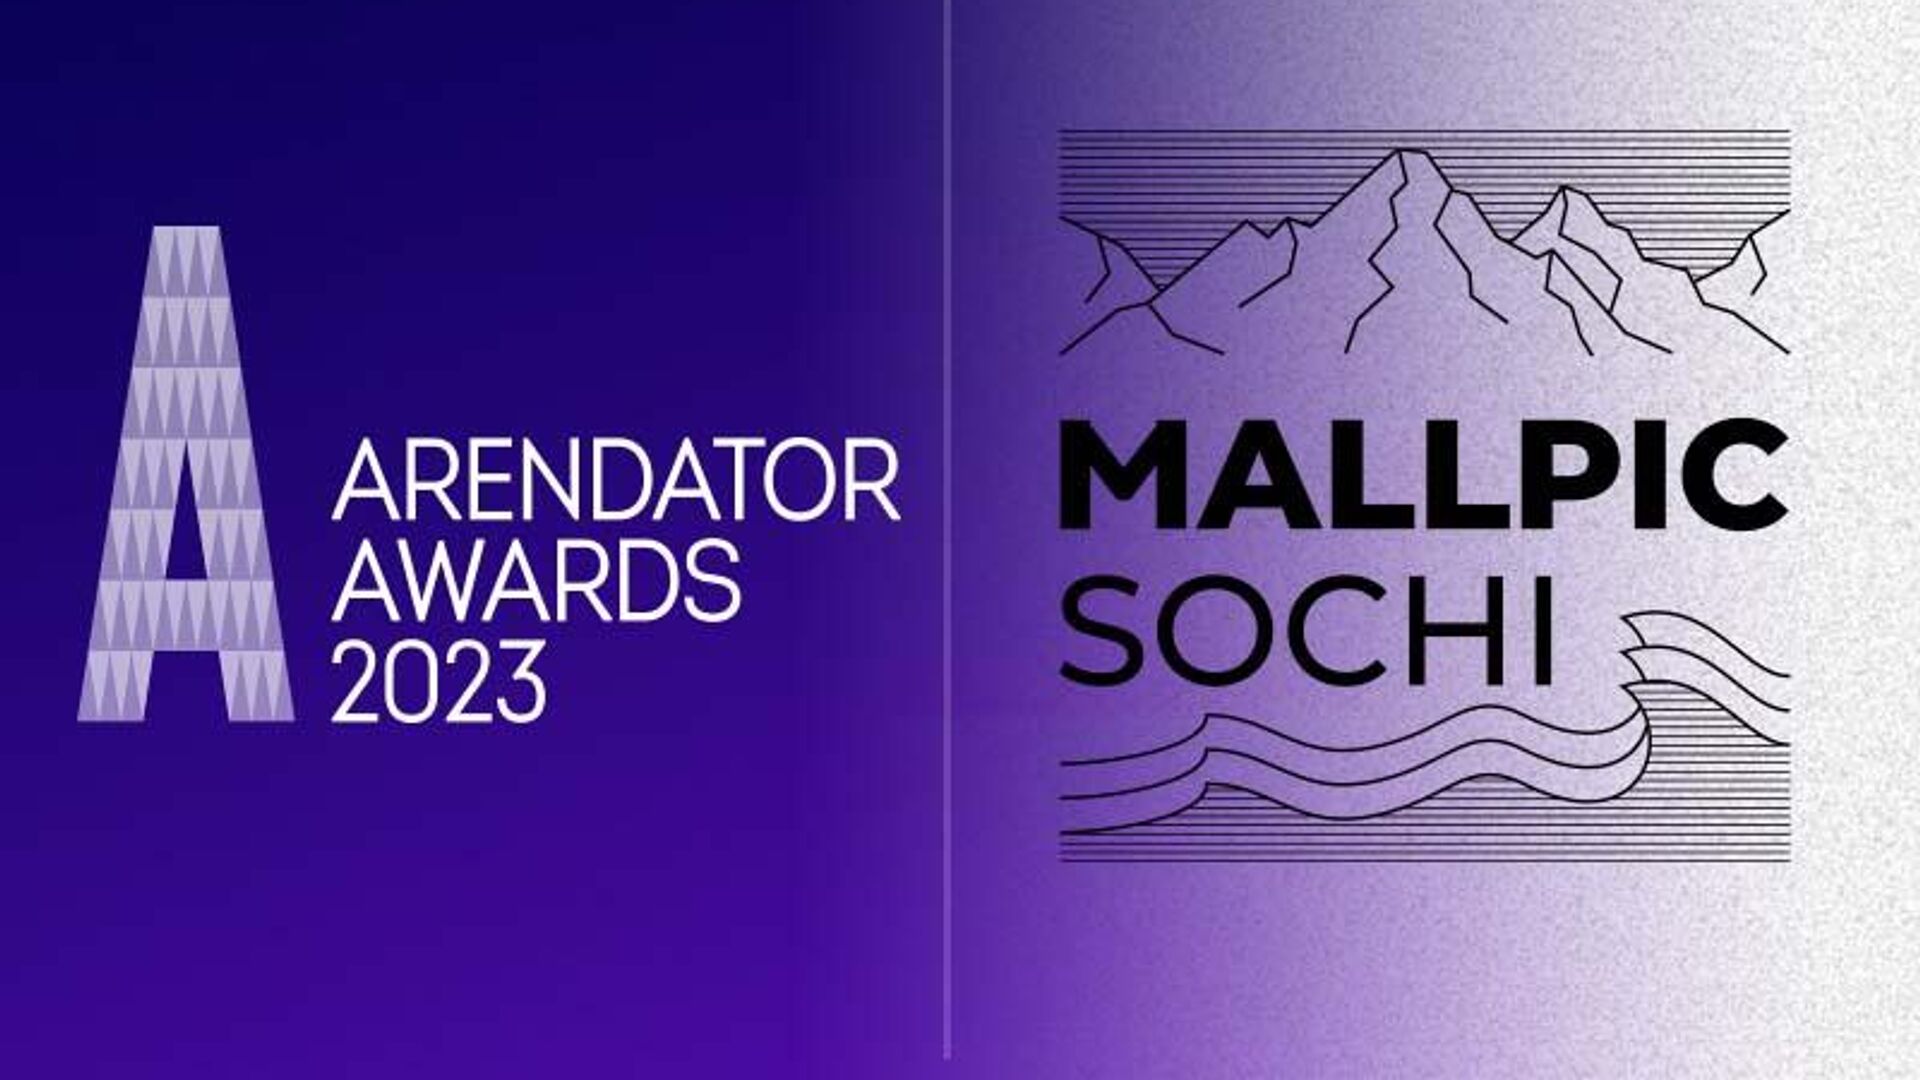 Сочи 2023 2024. Mallpic 2023. Urban Awards 2023. Сочи конференция. Конференция ФАС Сочи 2023.